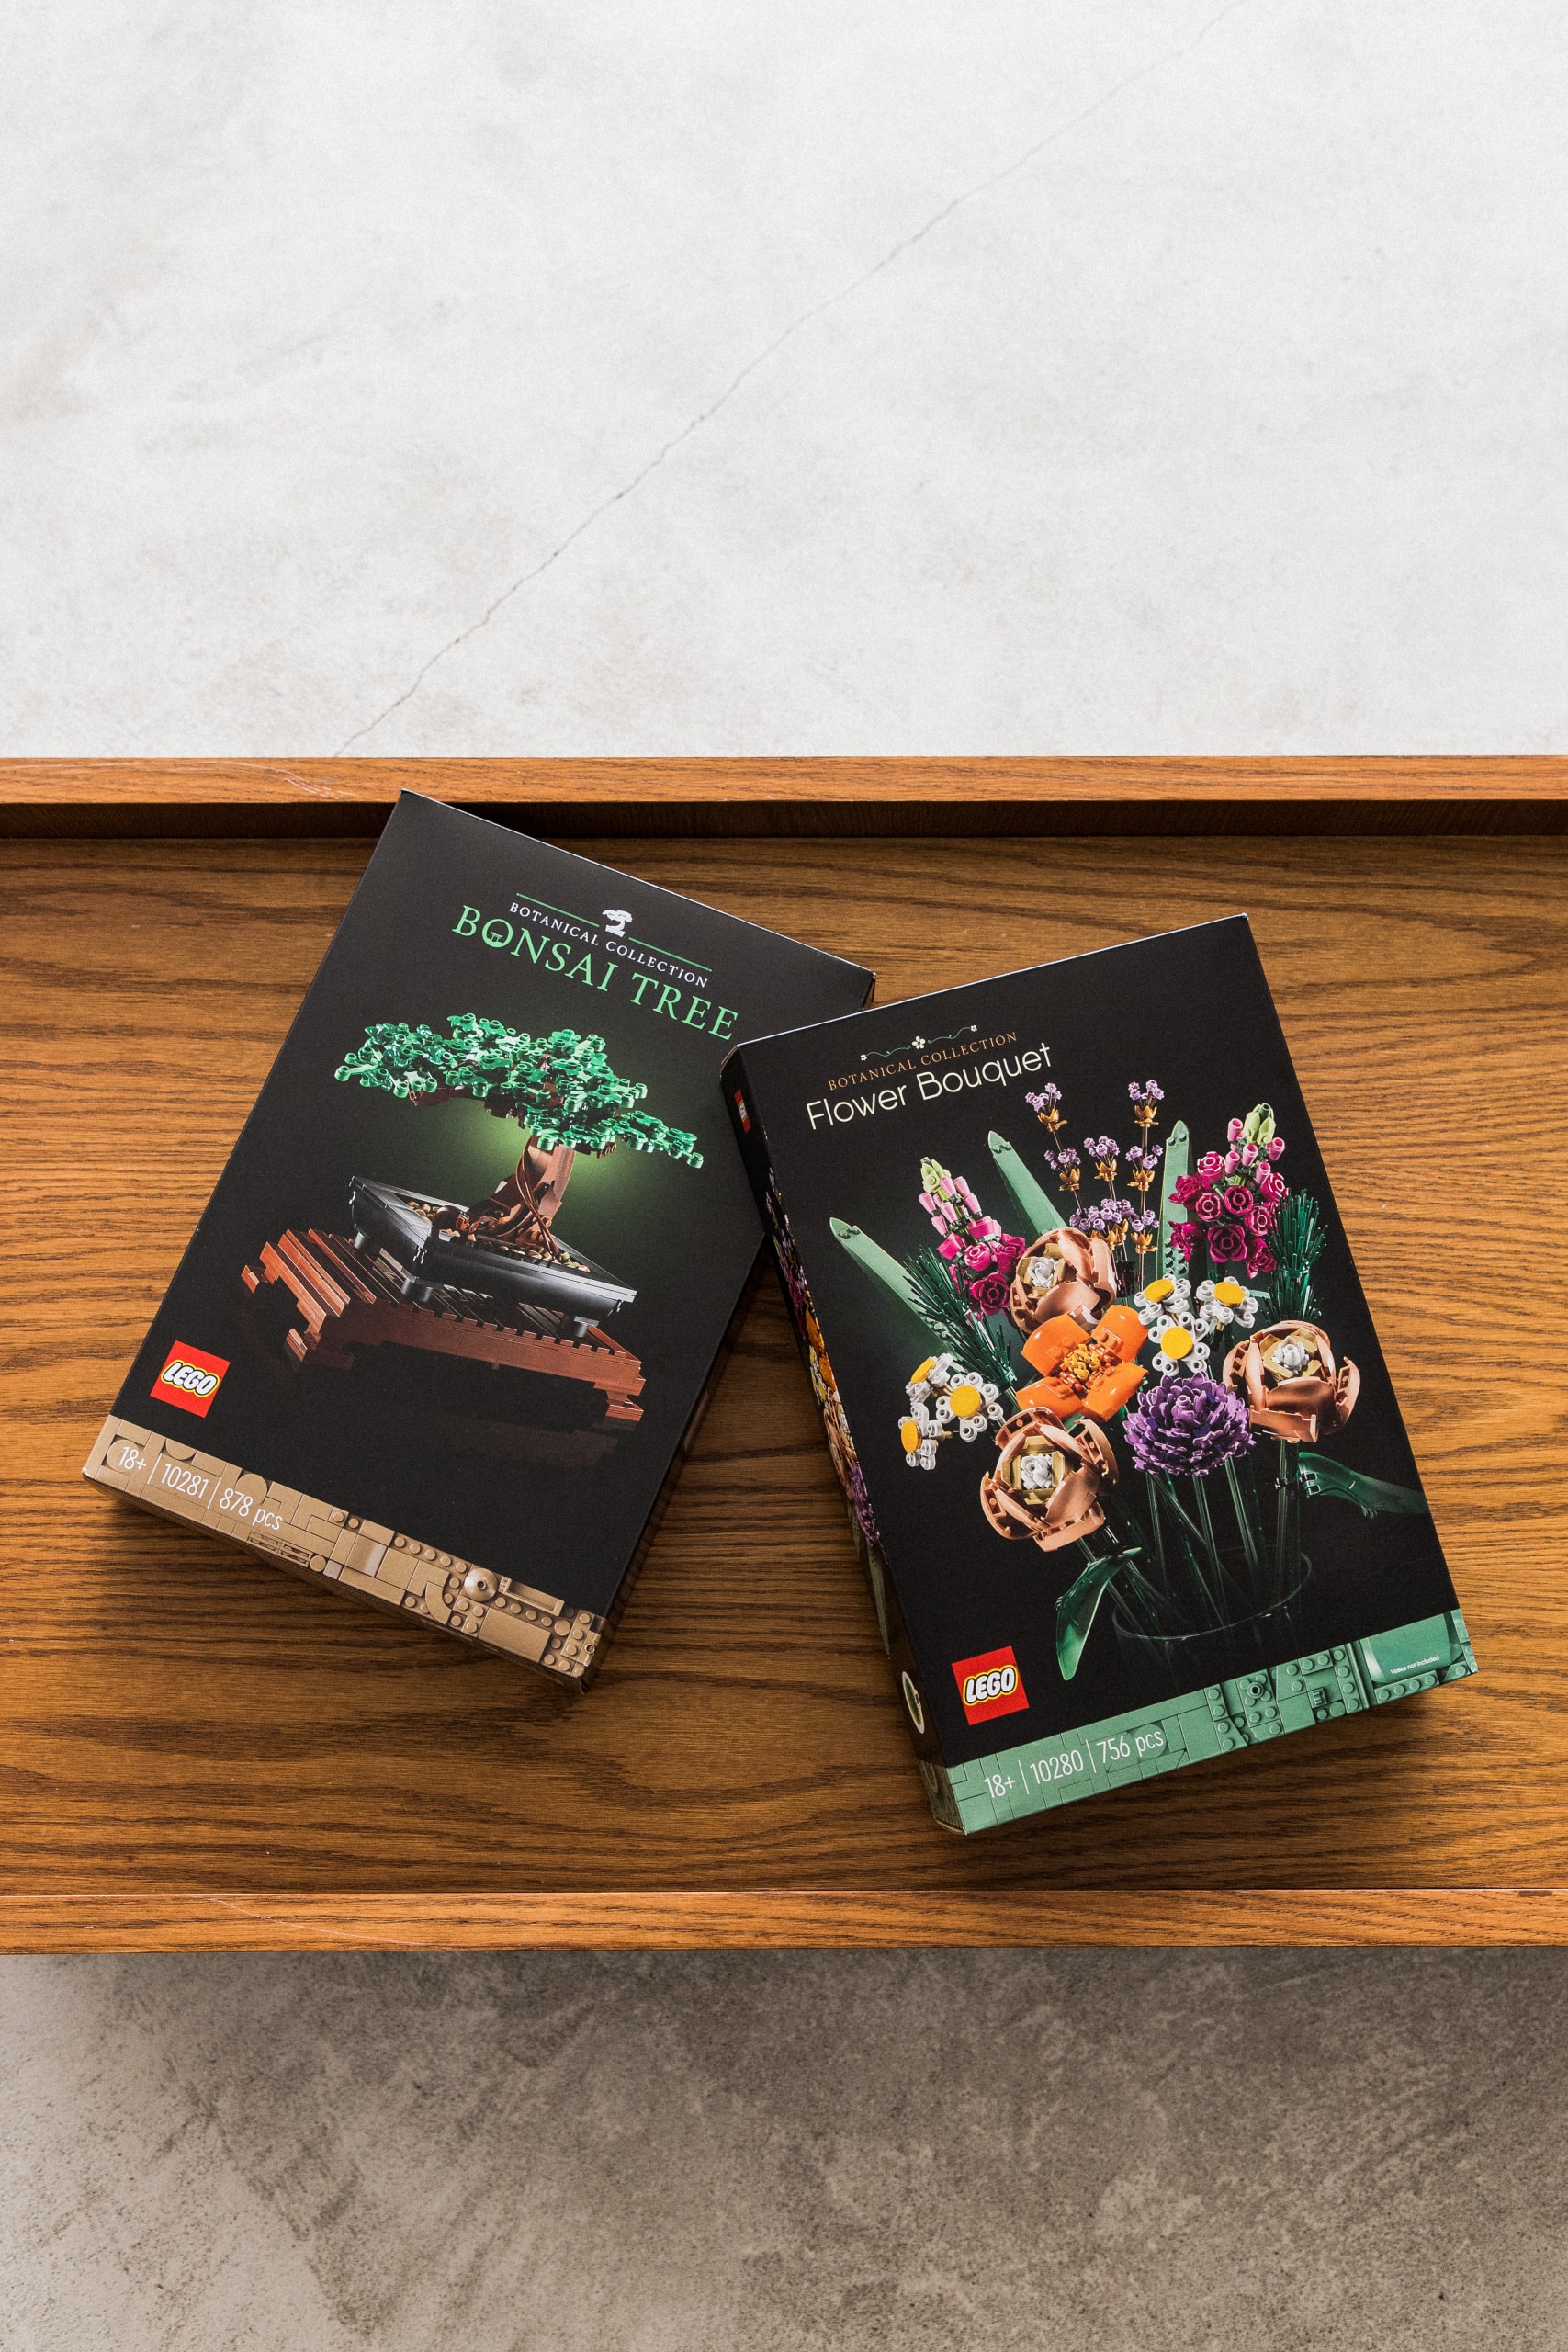 LEGO 全新花卉植栽系列盒組「Flower Bouquet」及 「Bonsai Tree」台灣抽籤情報公開